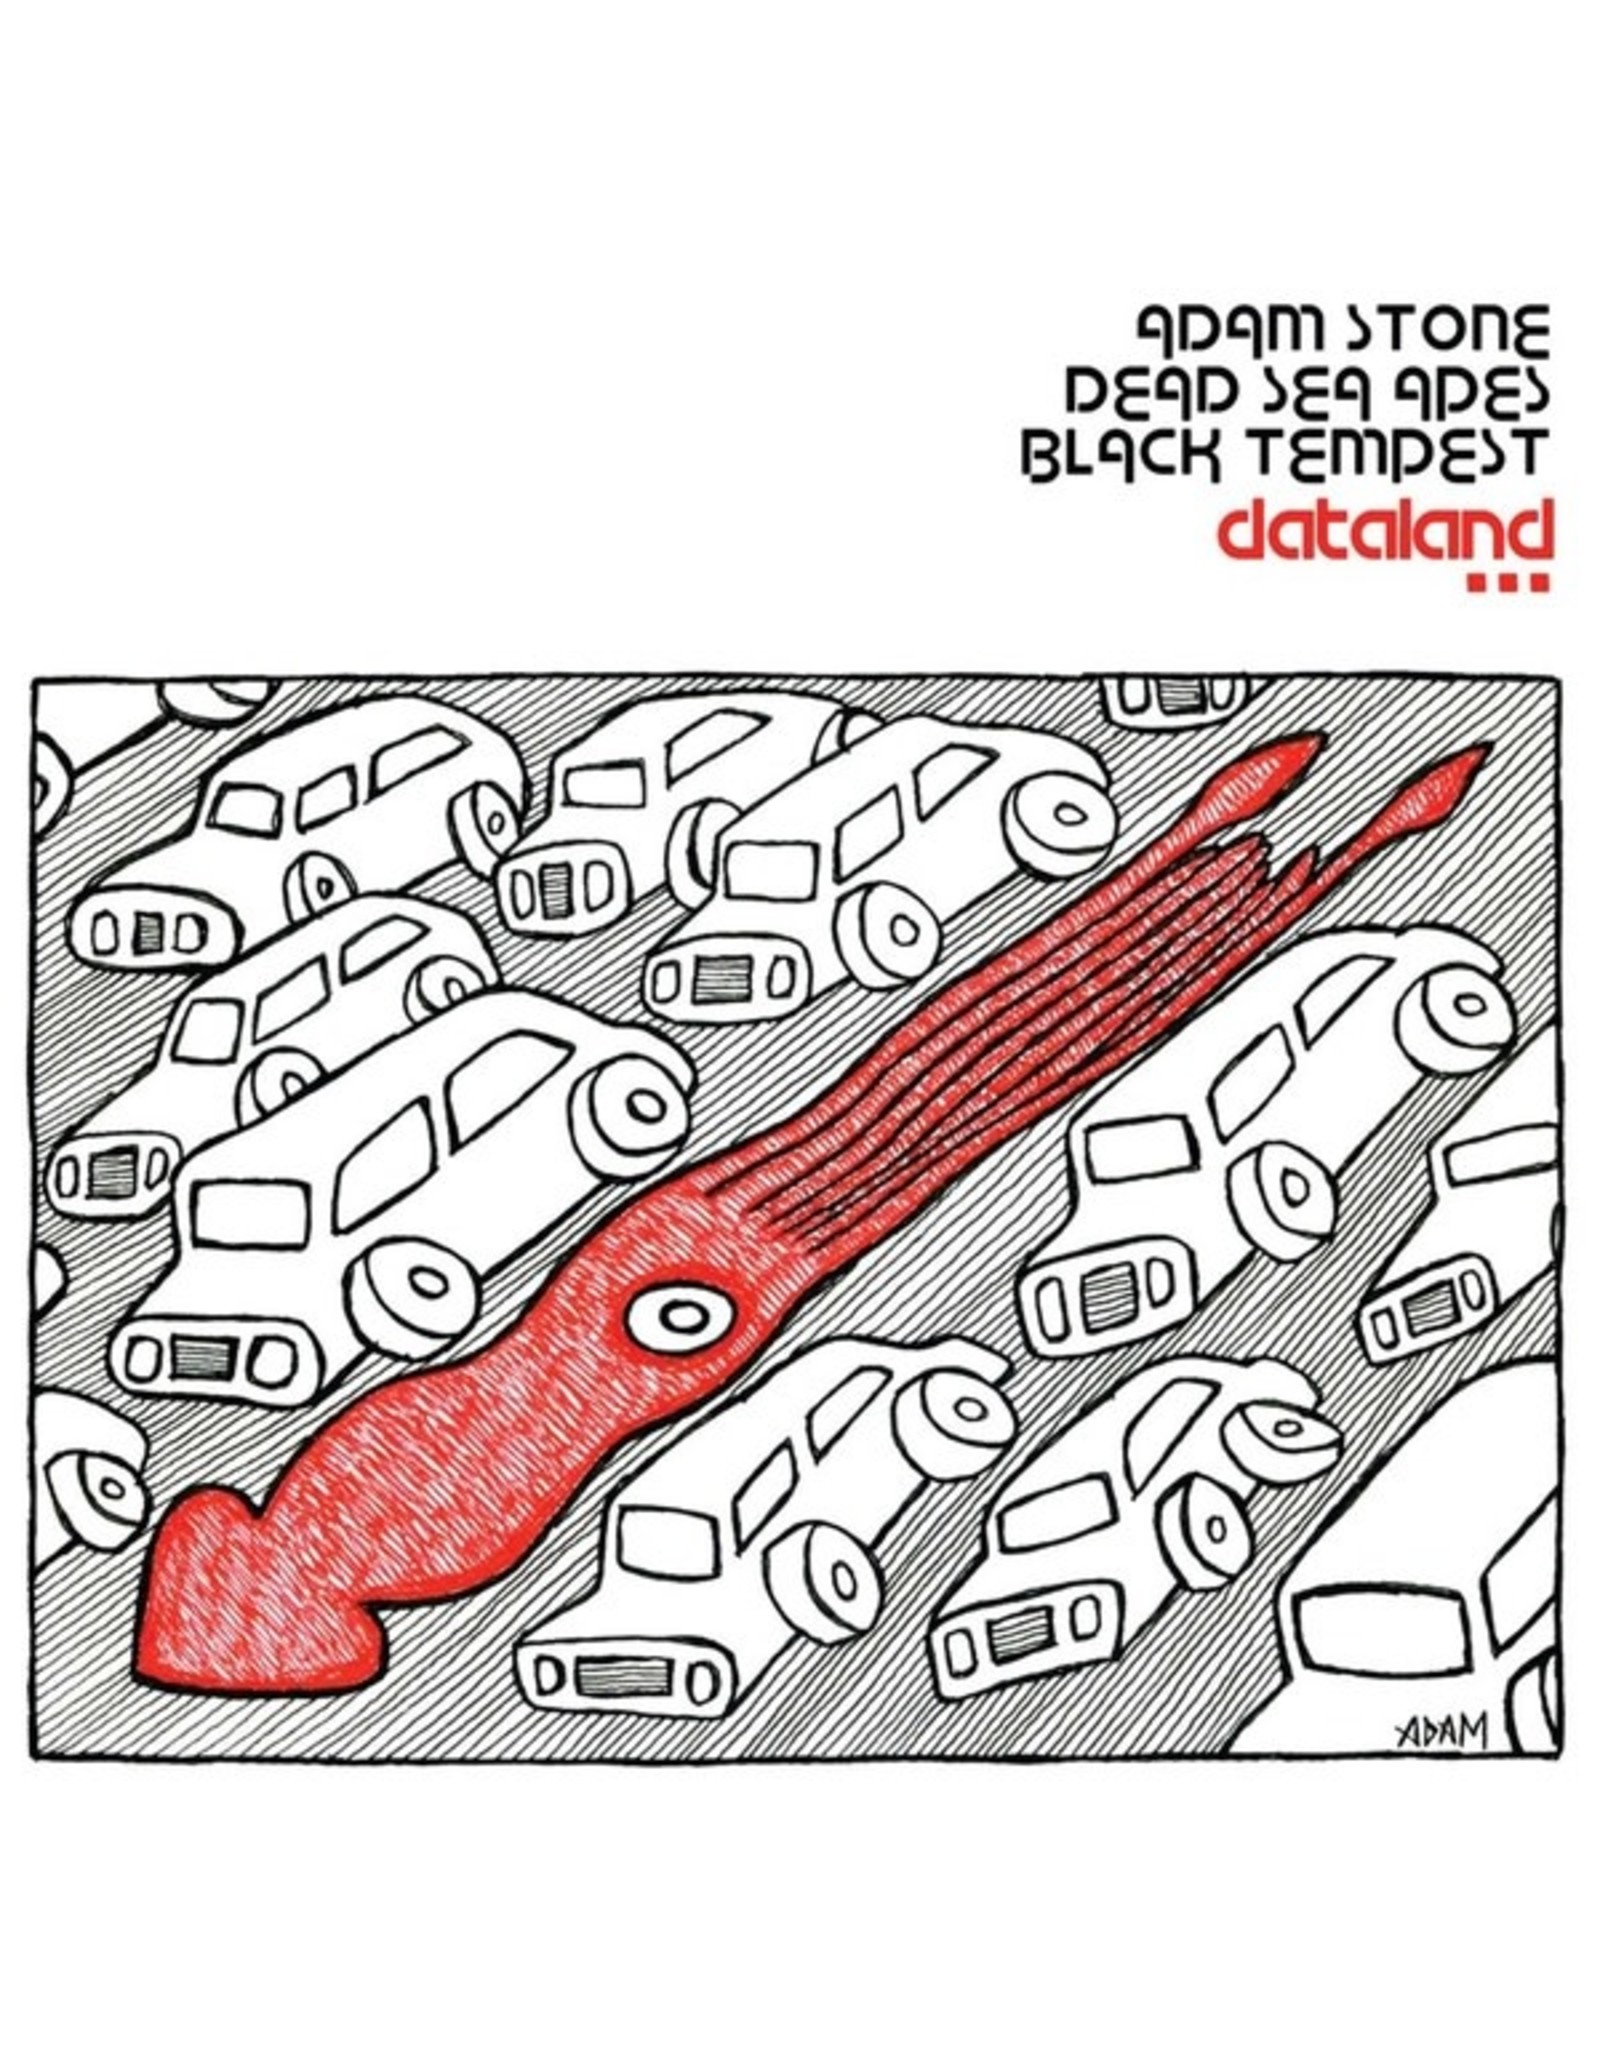 Feeding Tube Stone, Adam/Dead Sea Apes/Black Tempest: Dataland LP